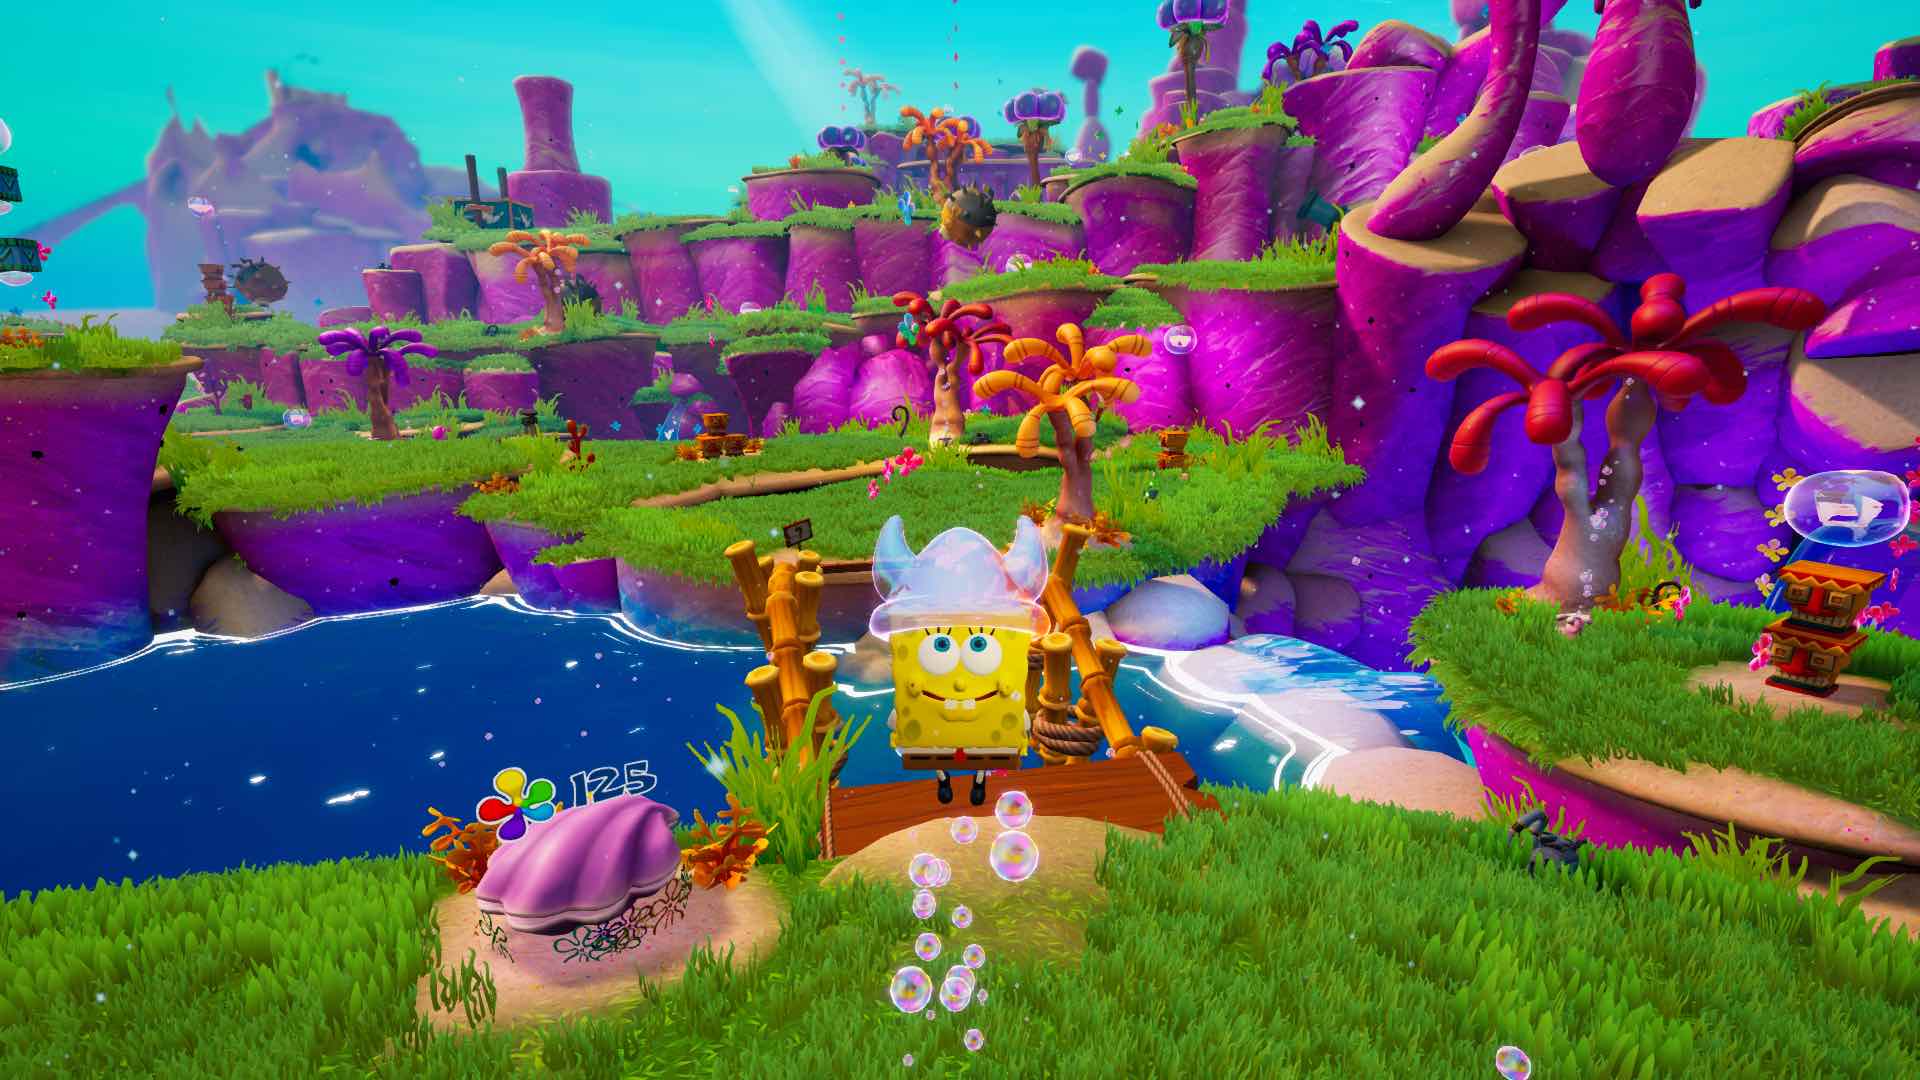 Release Date Confirmed For SpongeBob SquarePants: Battle